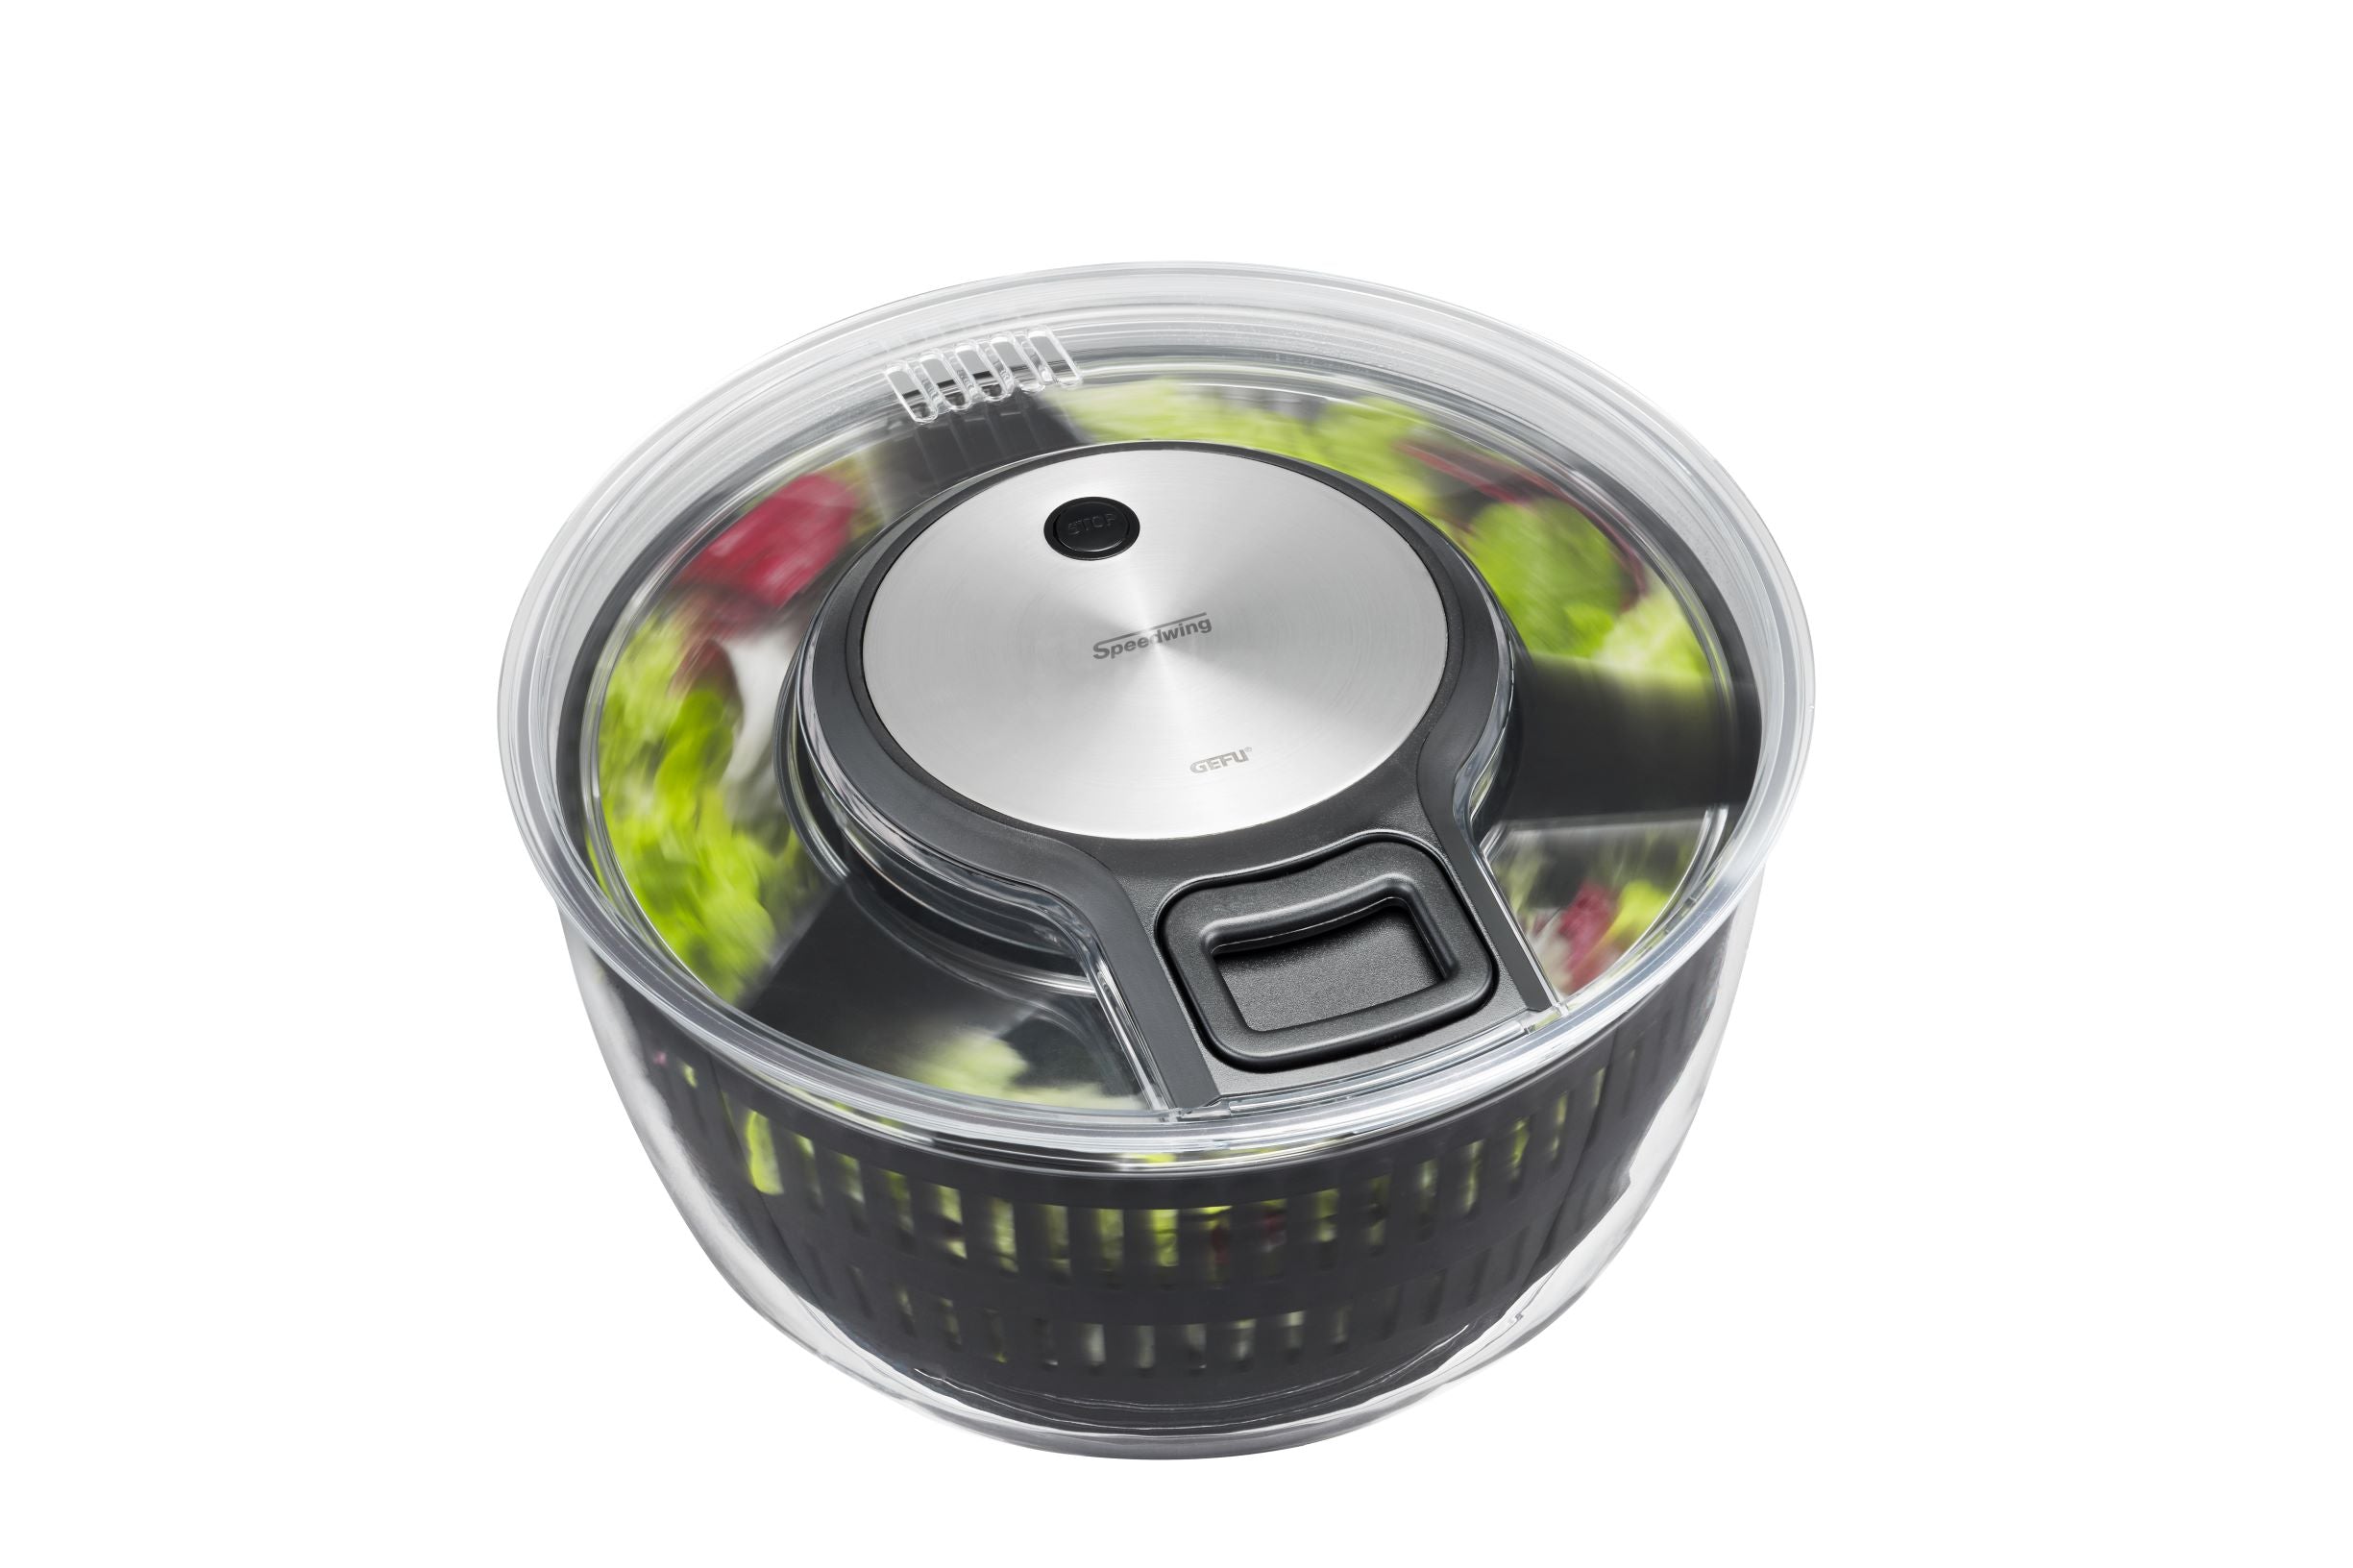 Matfer Bourgeat Swing Salad Spinner XL, 5 gal — CulinaryCookware